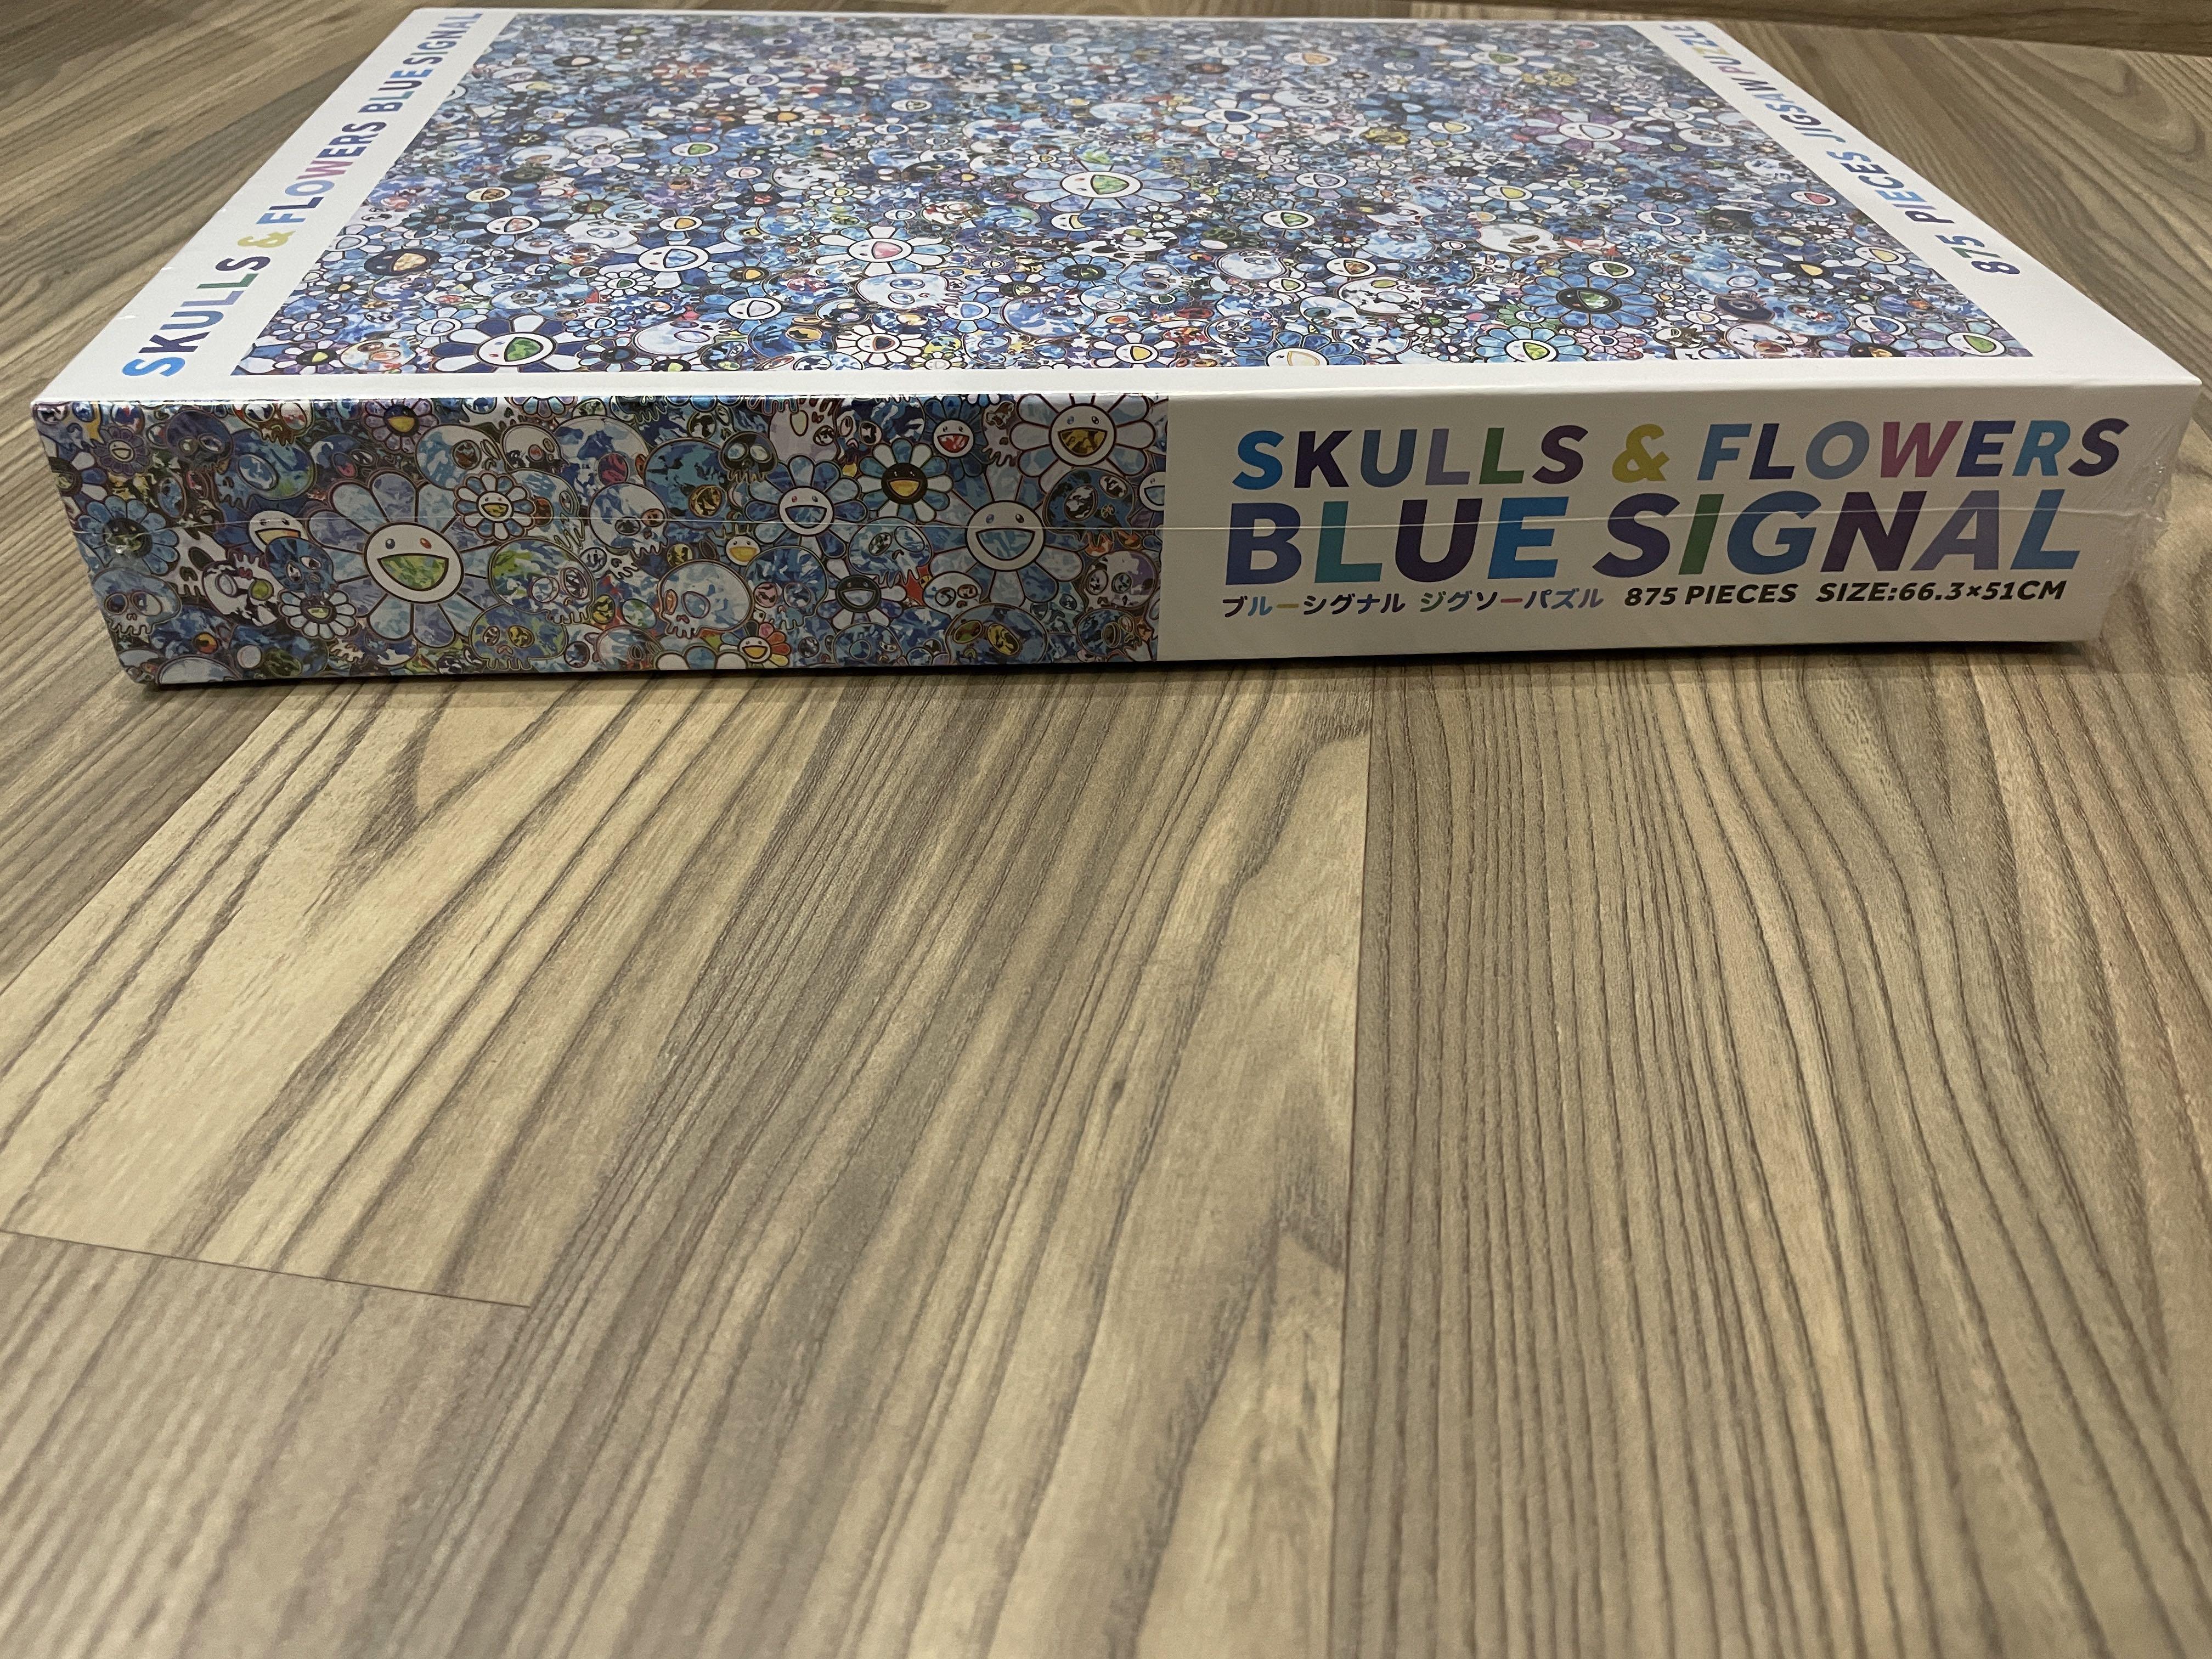 Jigsaw Puzzle / SKULLS & FLOWERS BLUEセット